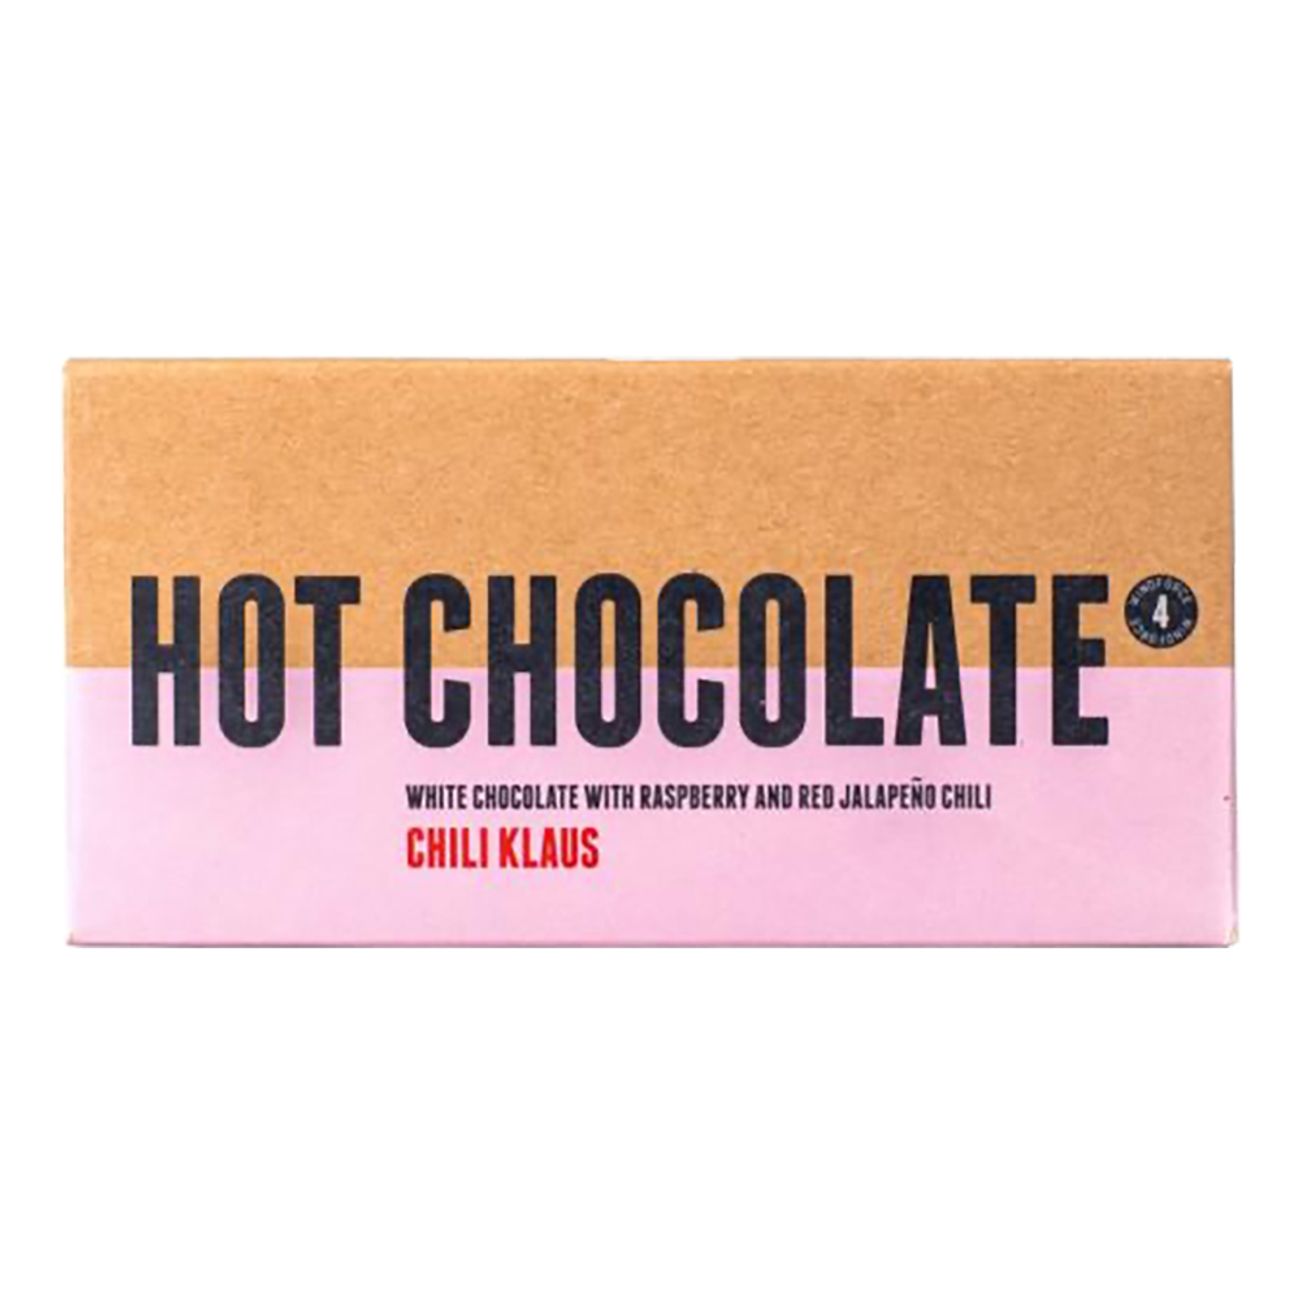 chili-klaus-hot-chocolate-hallon-jalapeno-83130-2